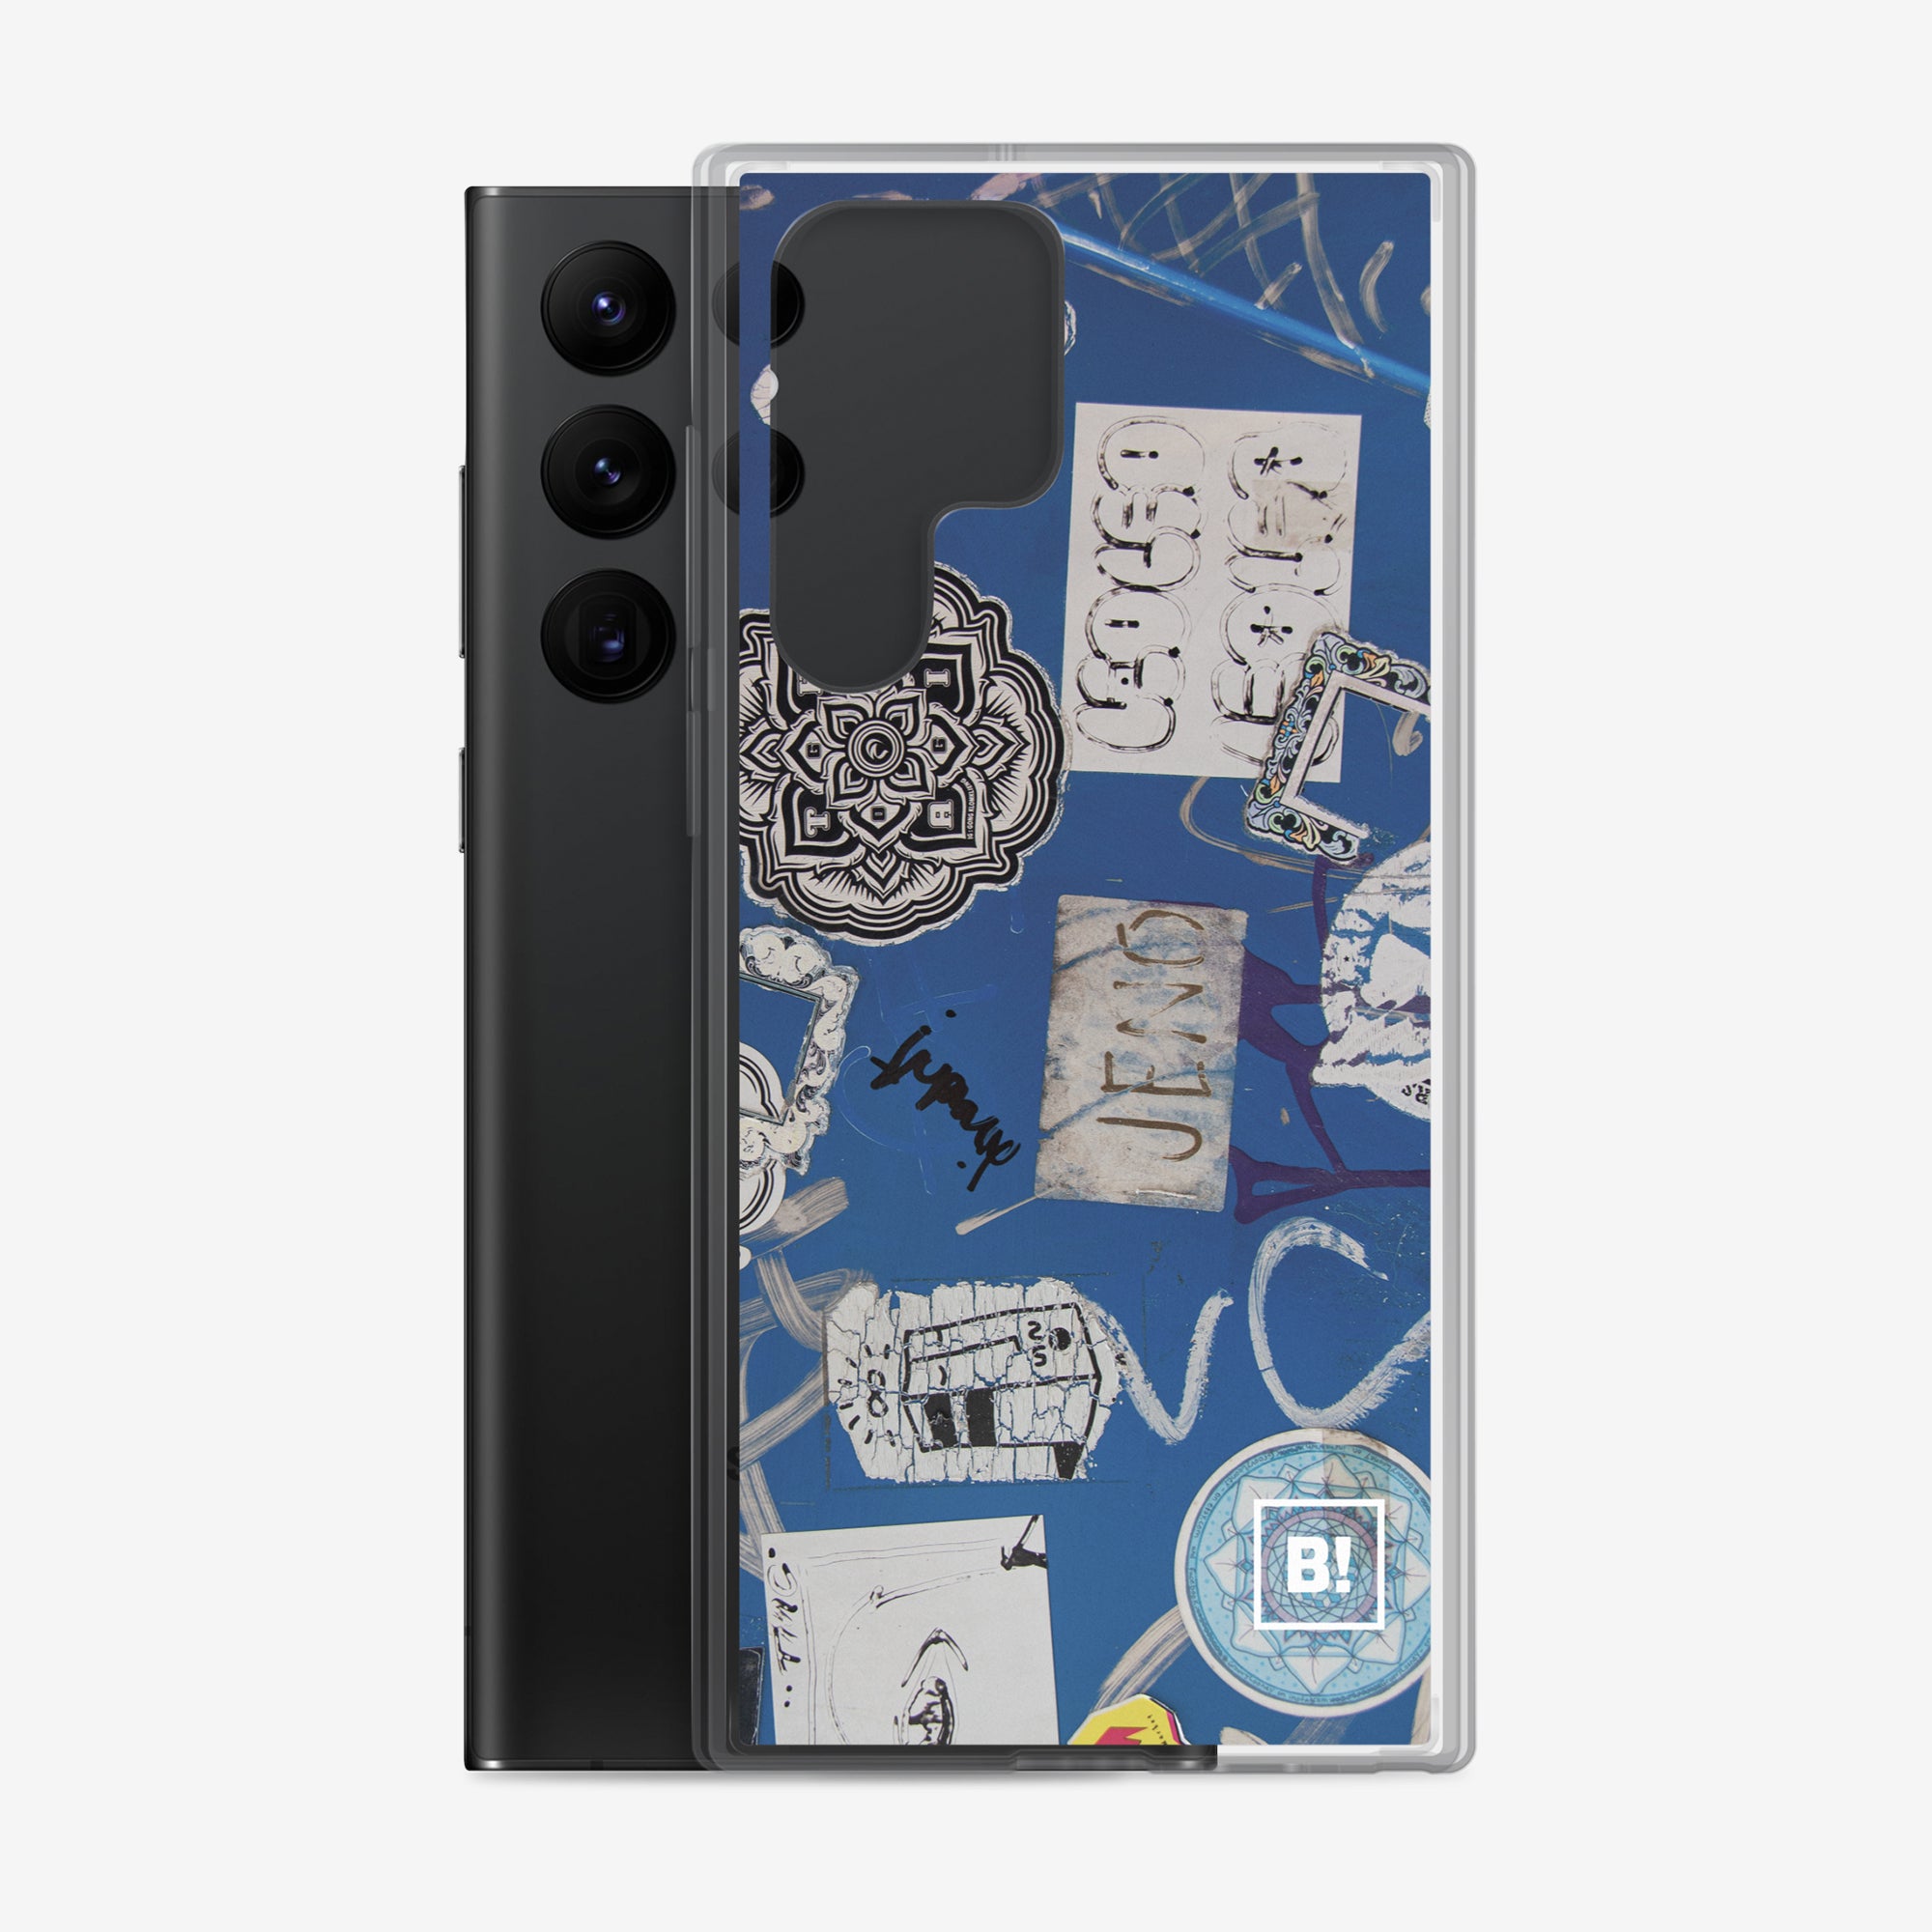 Binspired Leo Leo No2 Urban Art Samsung Galaxy s22 Ultra Case with Phone